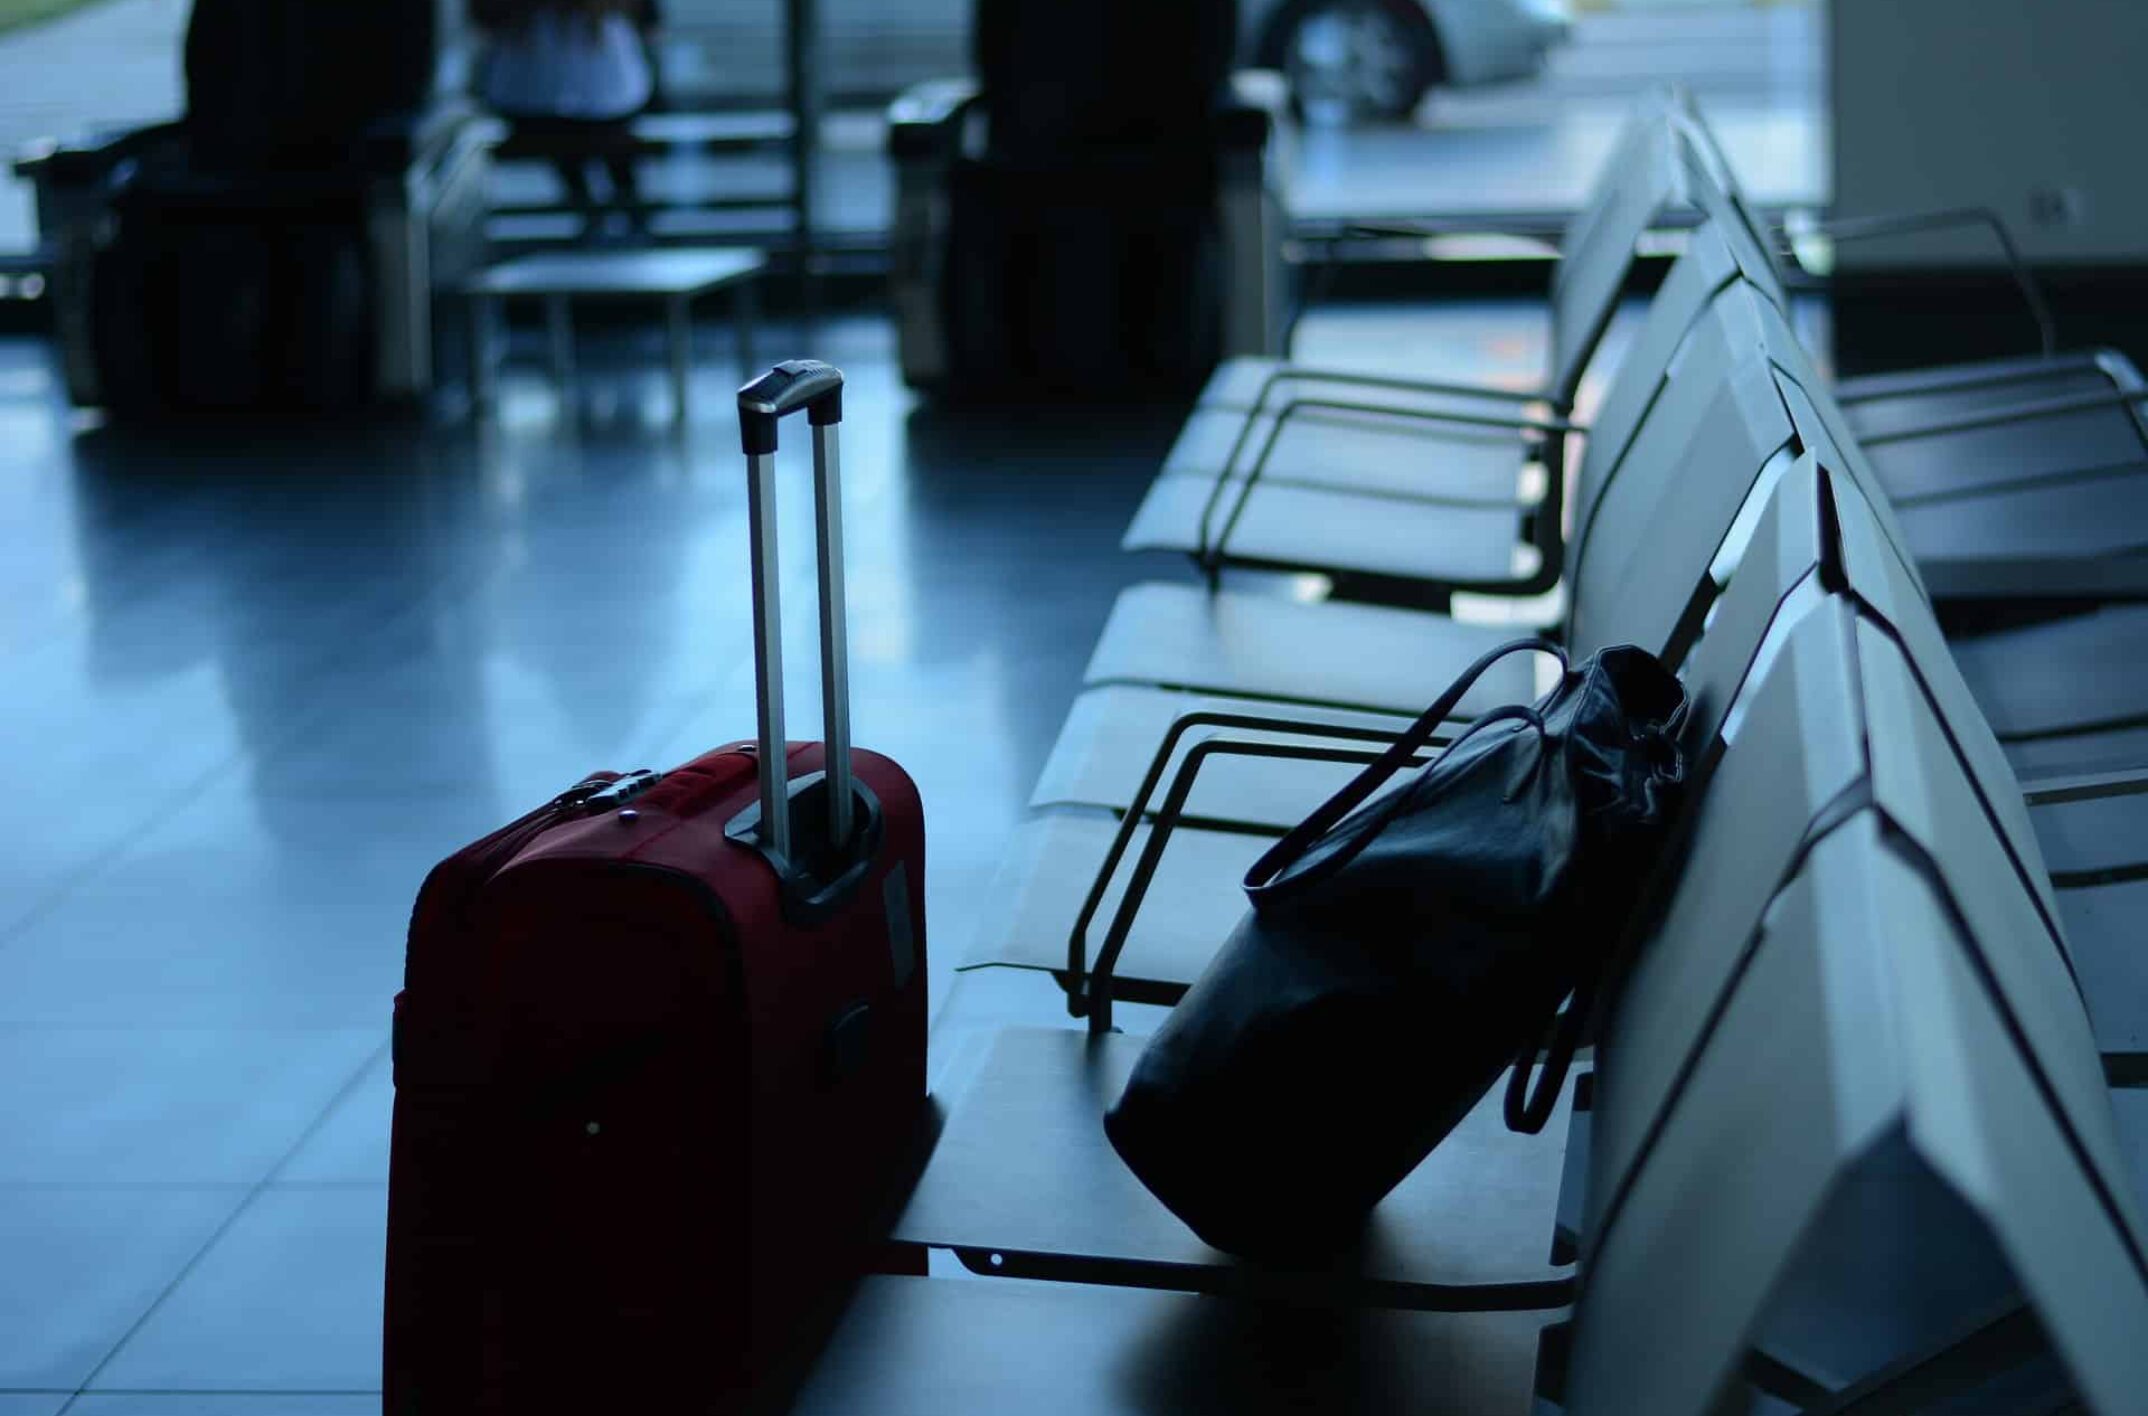 Valise cabine : pourquoi choisir ce bagage pour voyager ?